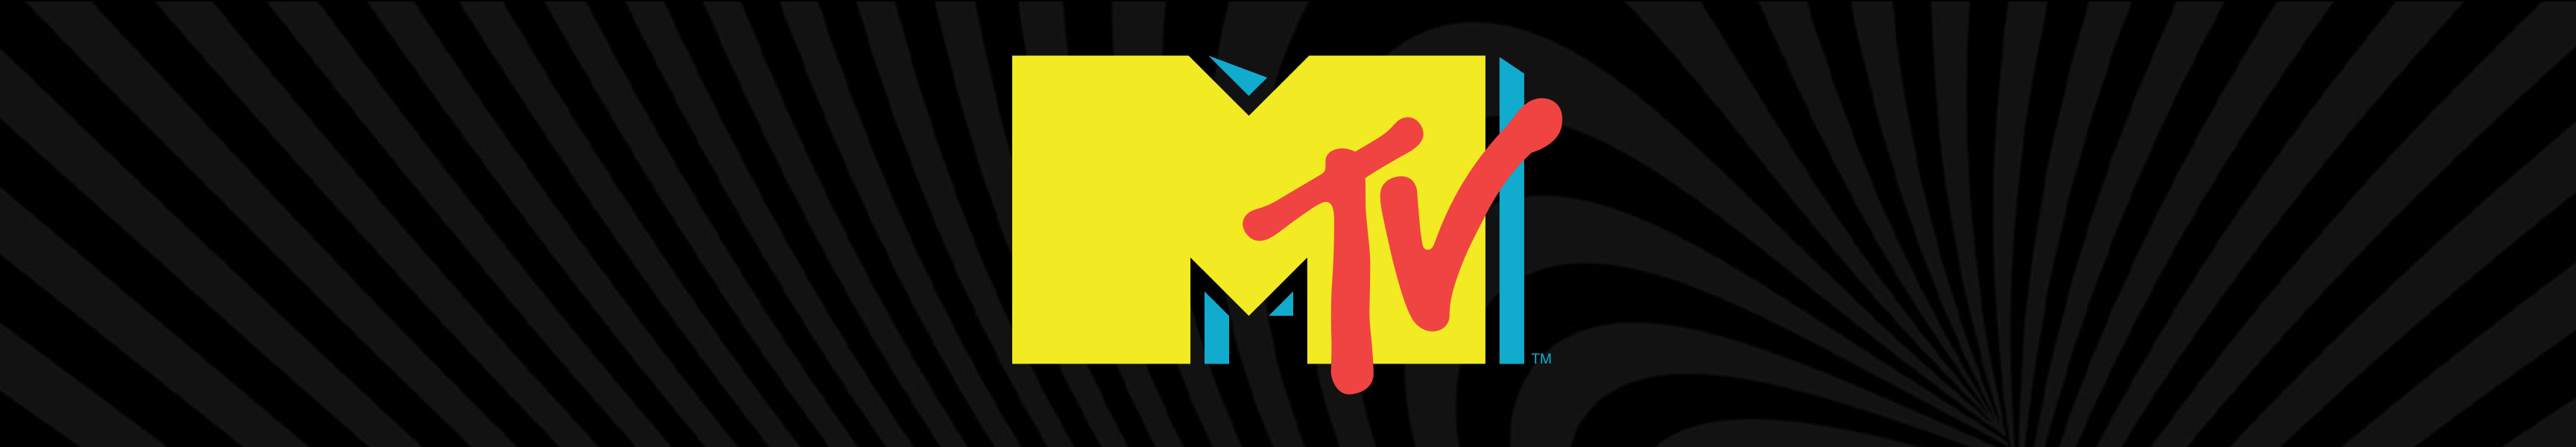 Cajas de teléfonos MTV